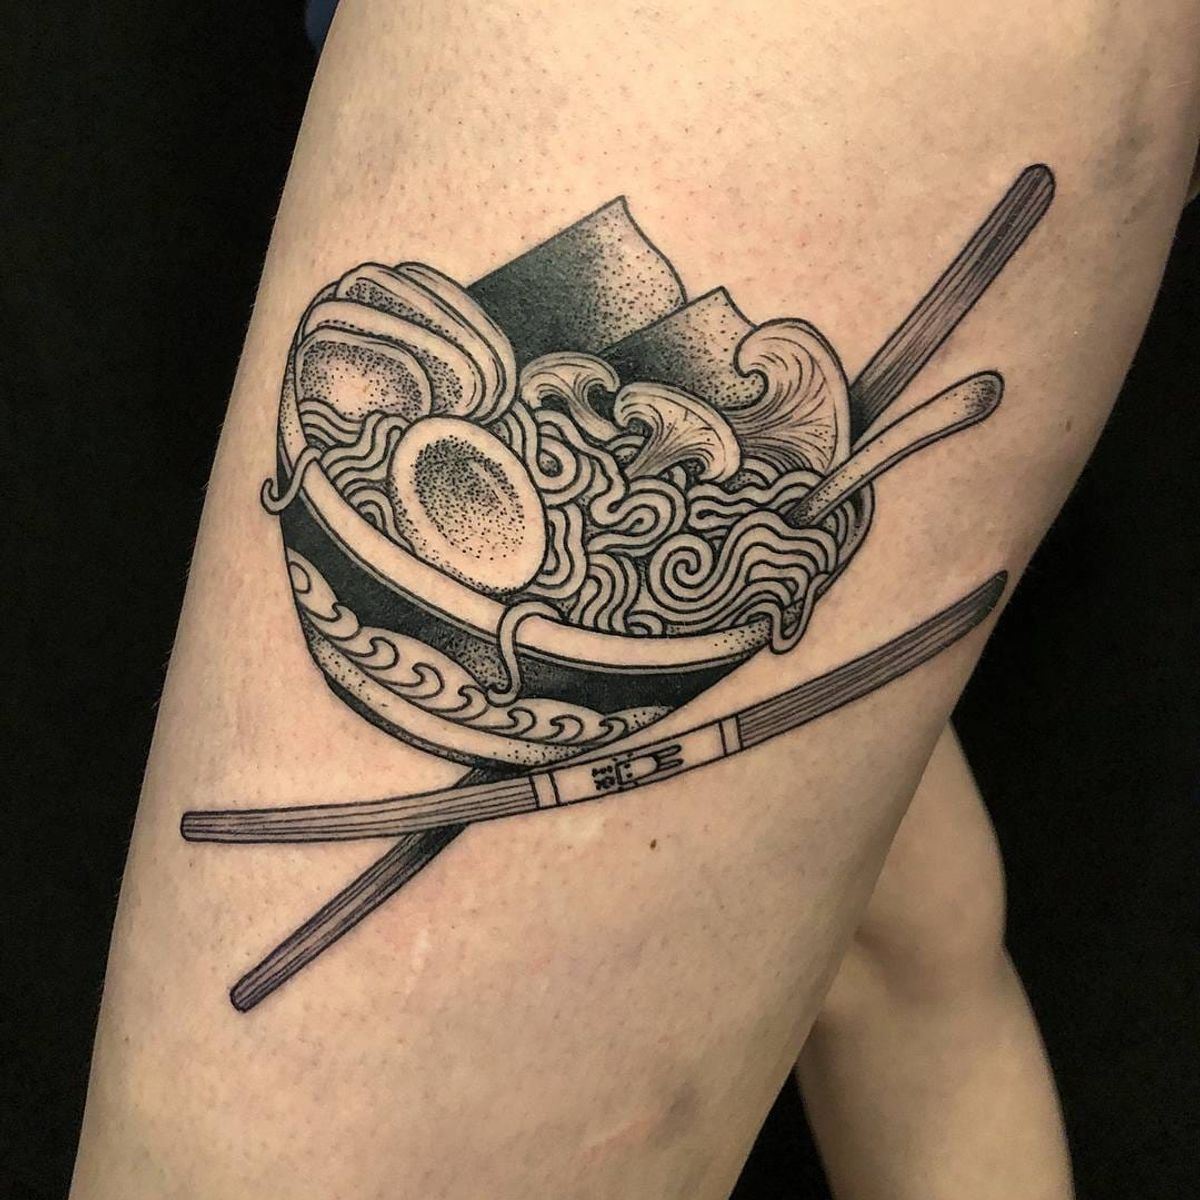 Bowl o ramen tattoo by Scott Santee #ScottSantee #ramentattoo #blackandgrey...